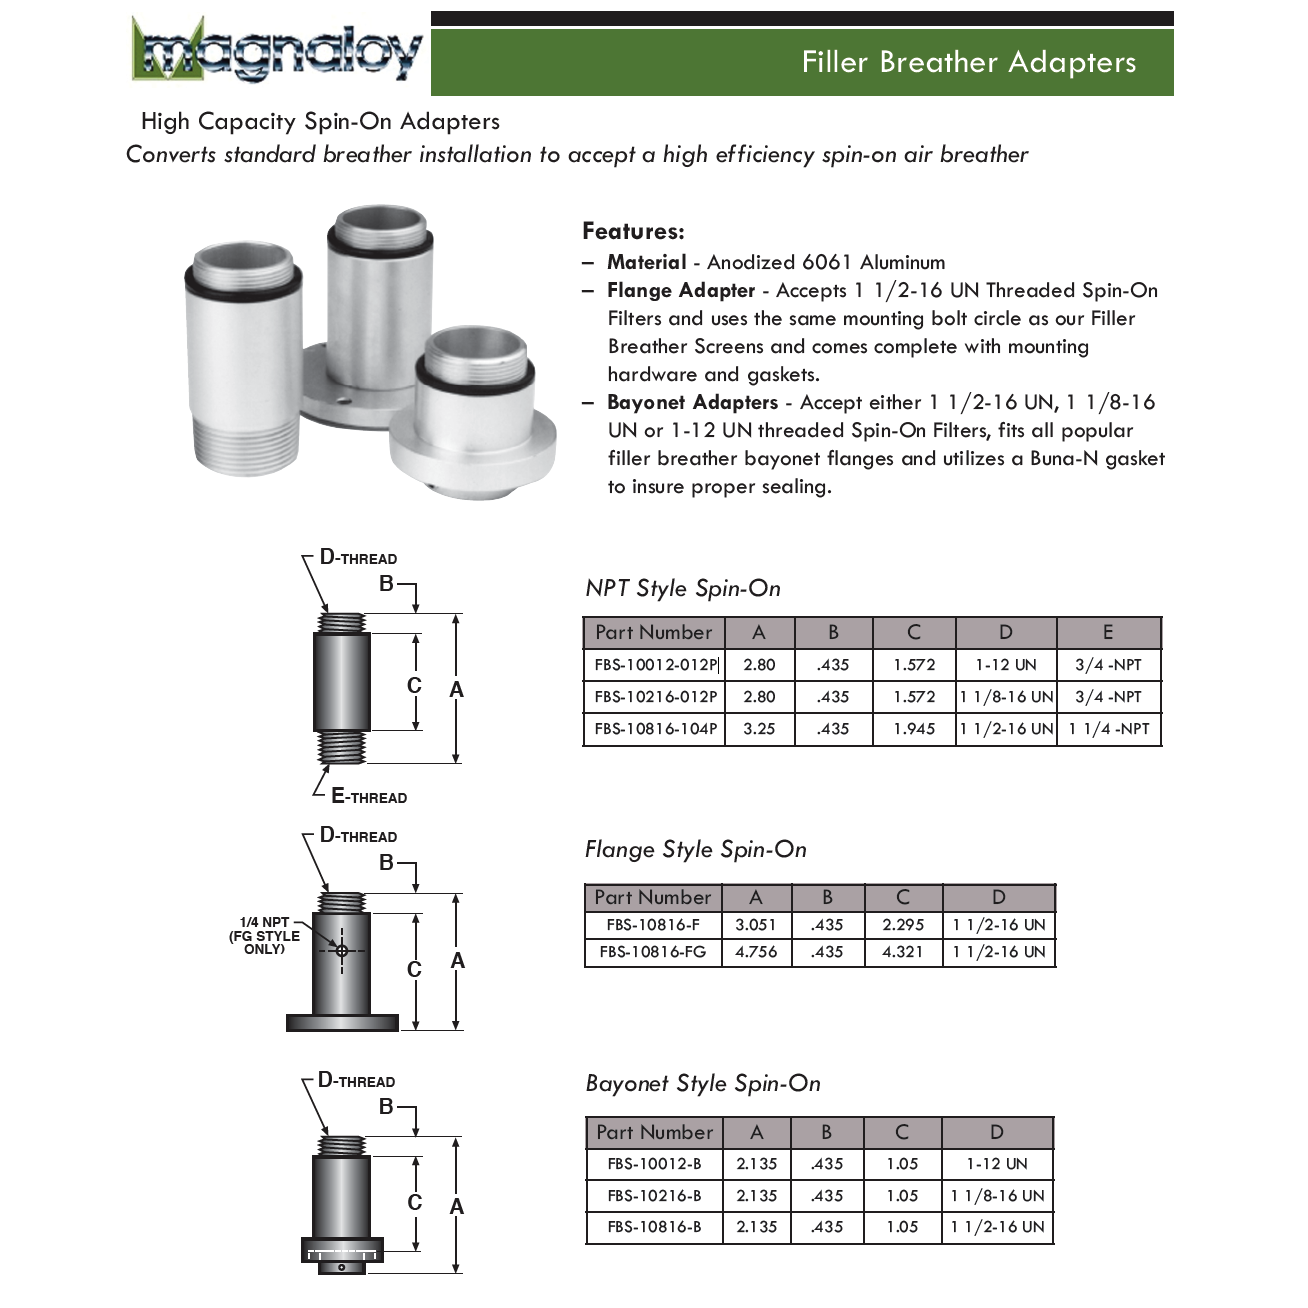 FBS-10216-012P : Magnaloy Spin-On NPT Adapter, Aluminum, 1 1/8-16 UN to 3/4" NPT